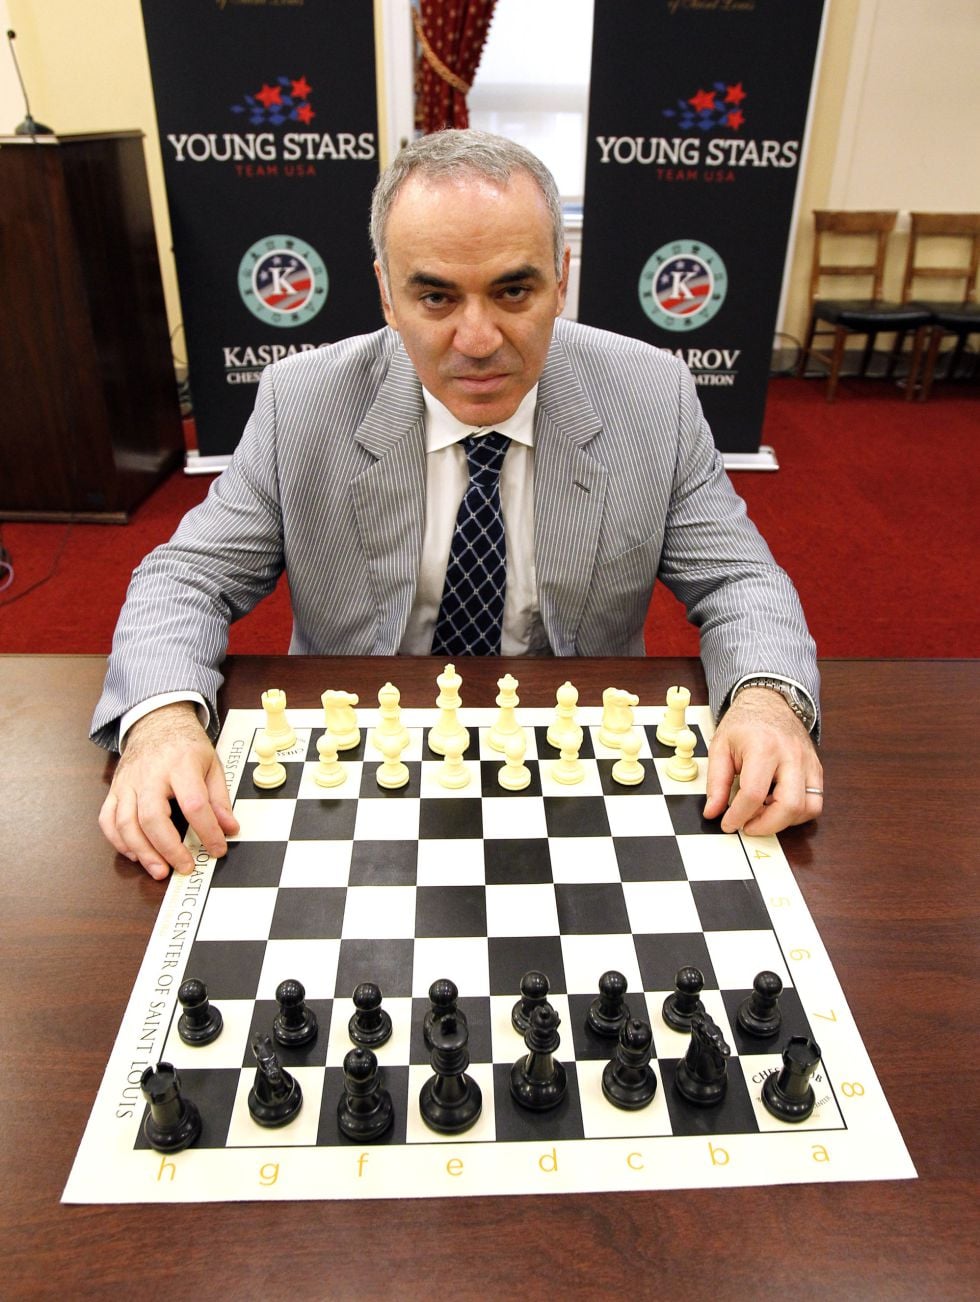 Ajedrez, la lucha continúa: La imagen de ajedrez del Día